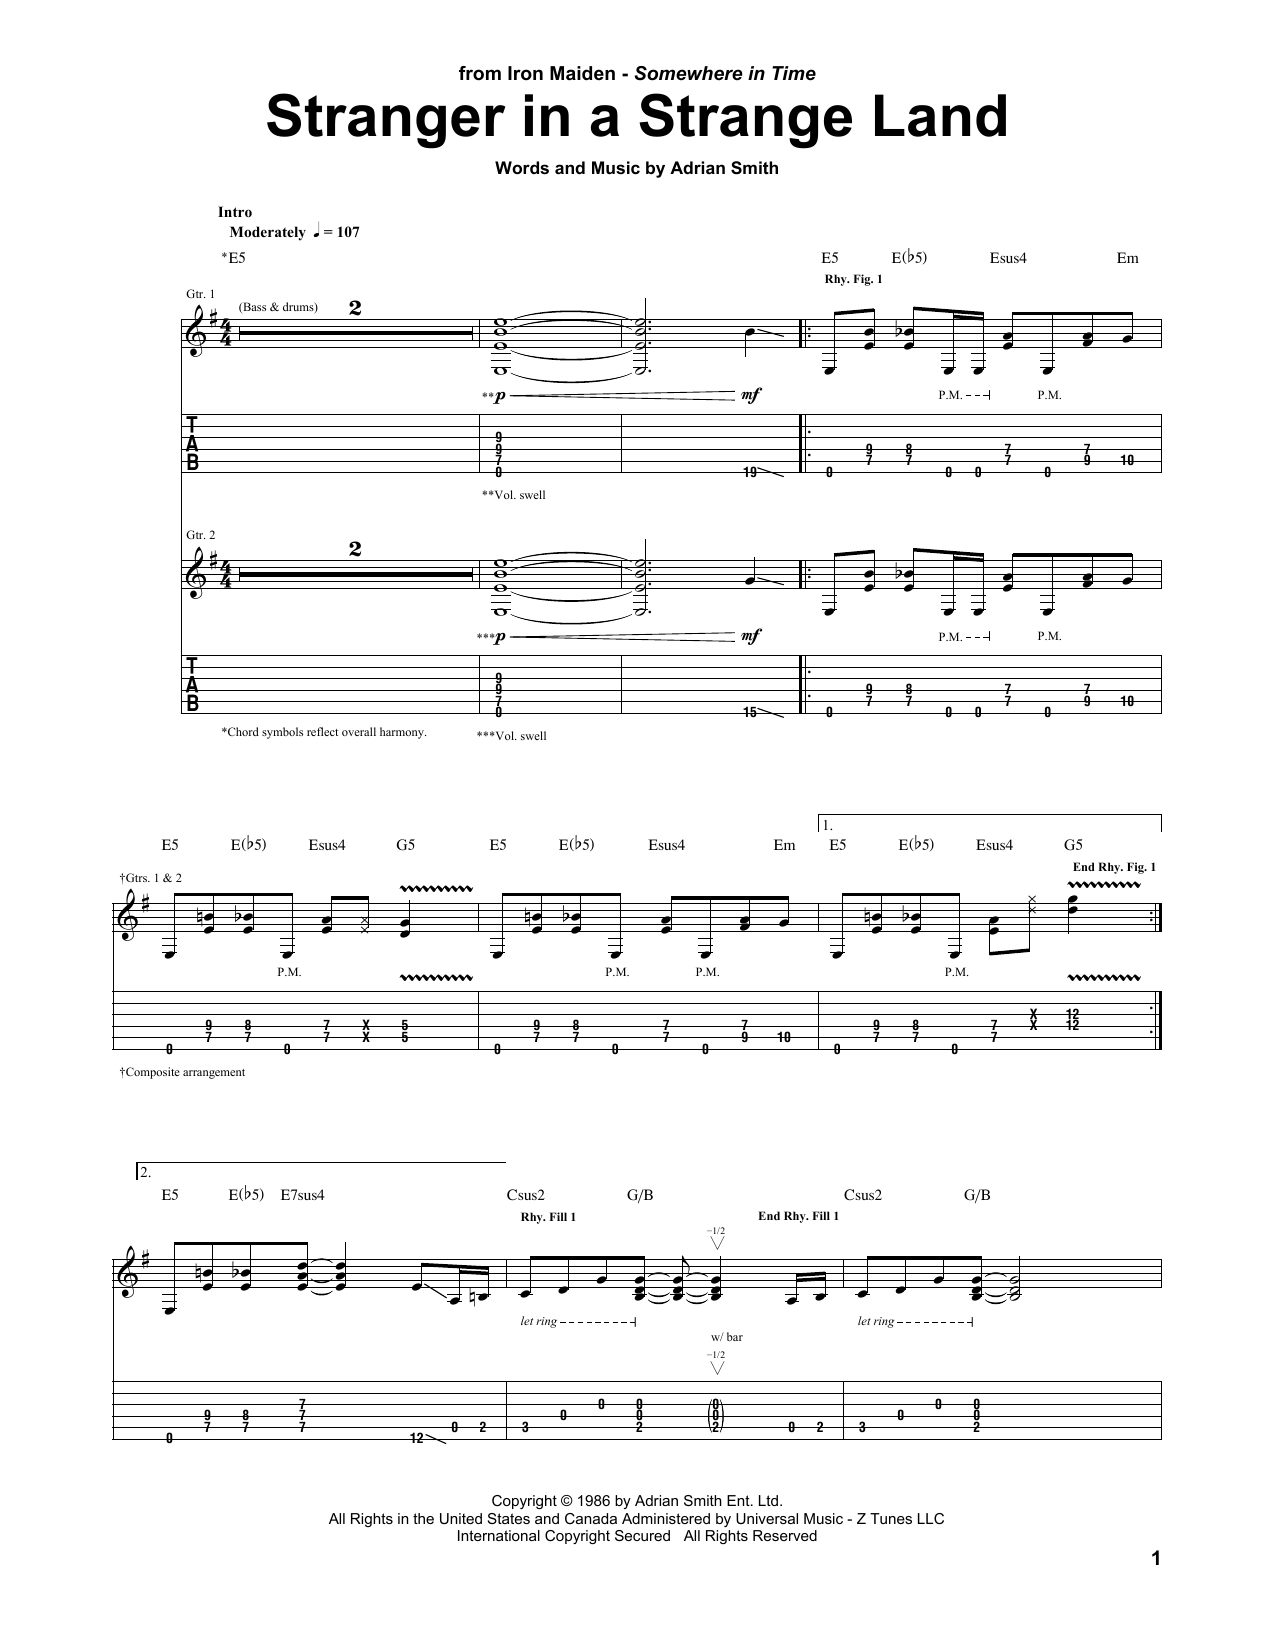 Iron Maiden Stranger In A Strange Land Sheet Music Notes & Chords for Guitar Tab - Download or Print PDF